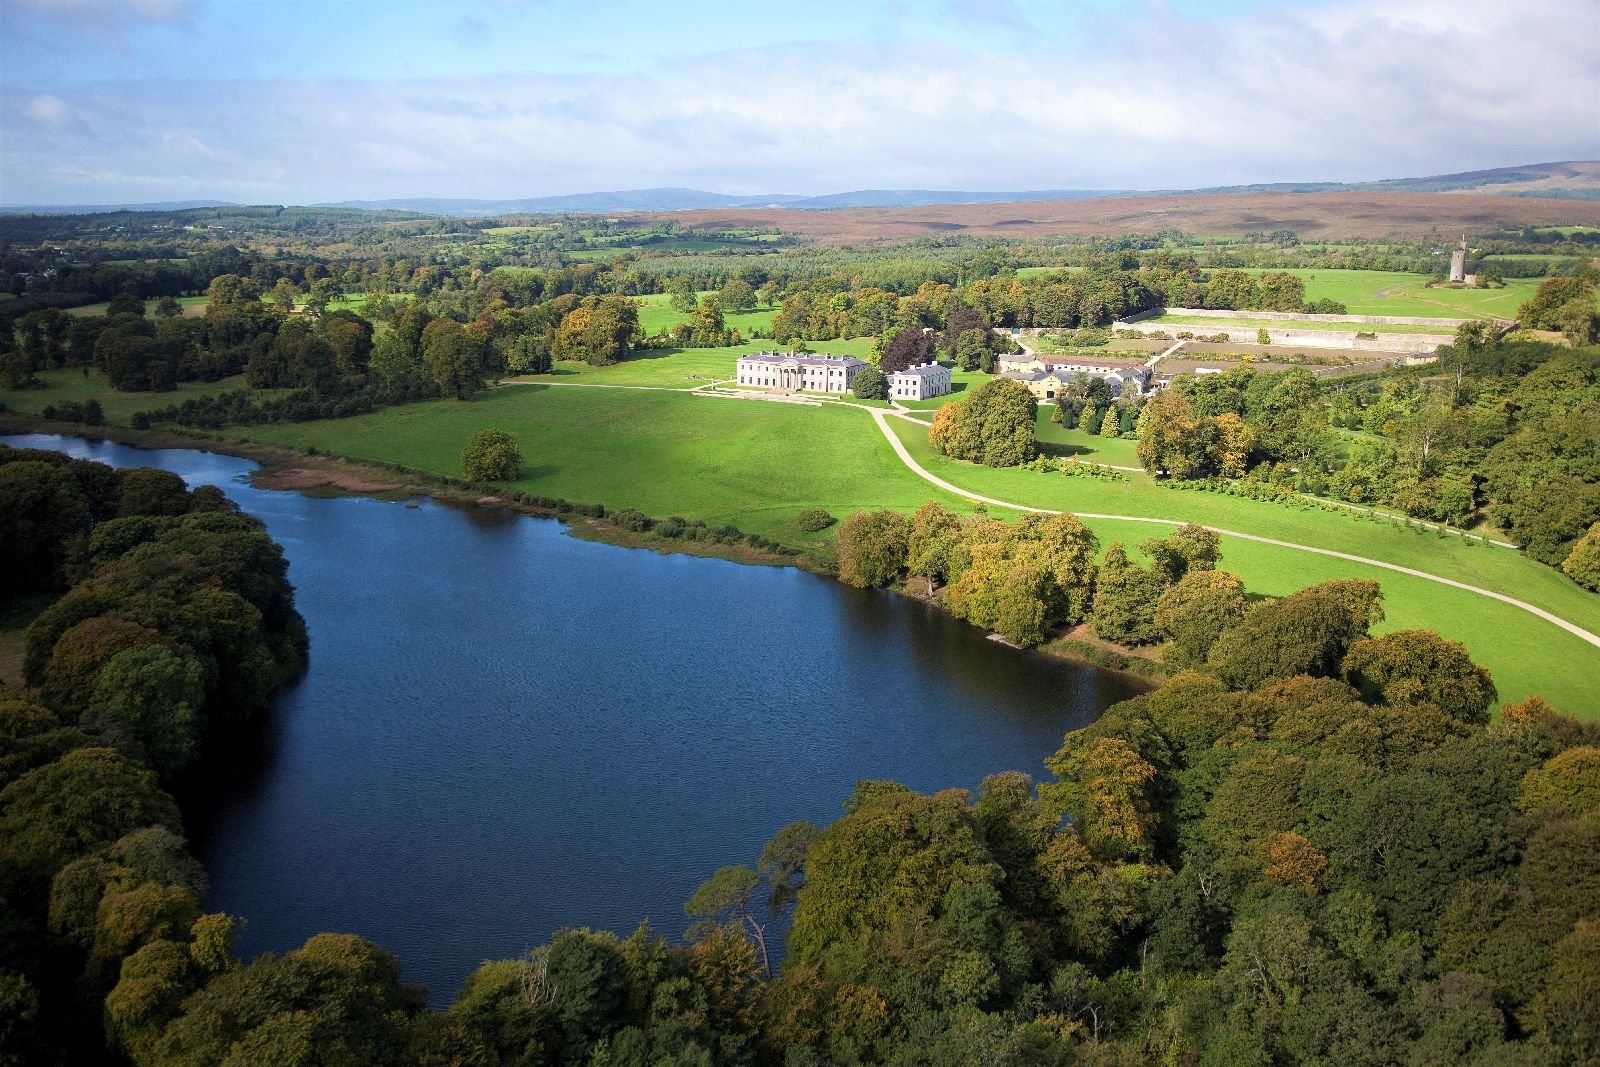 Aerial view of the Ballyfin Estate in Ireland